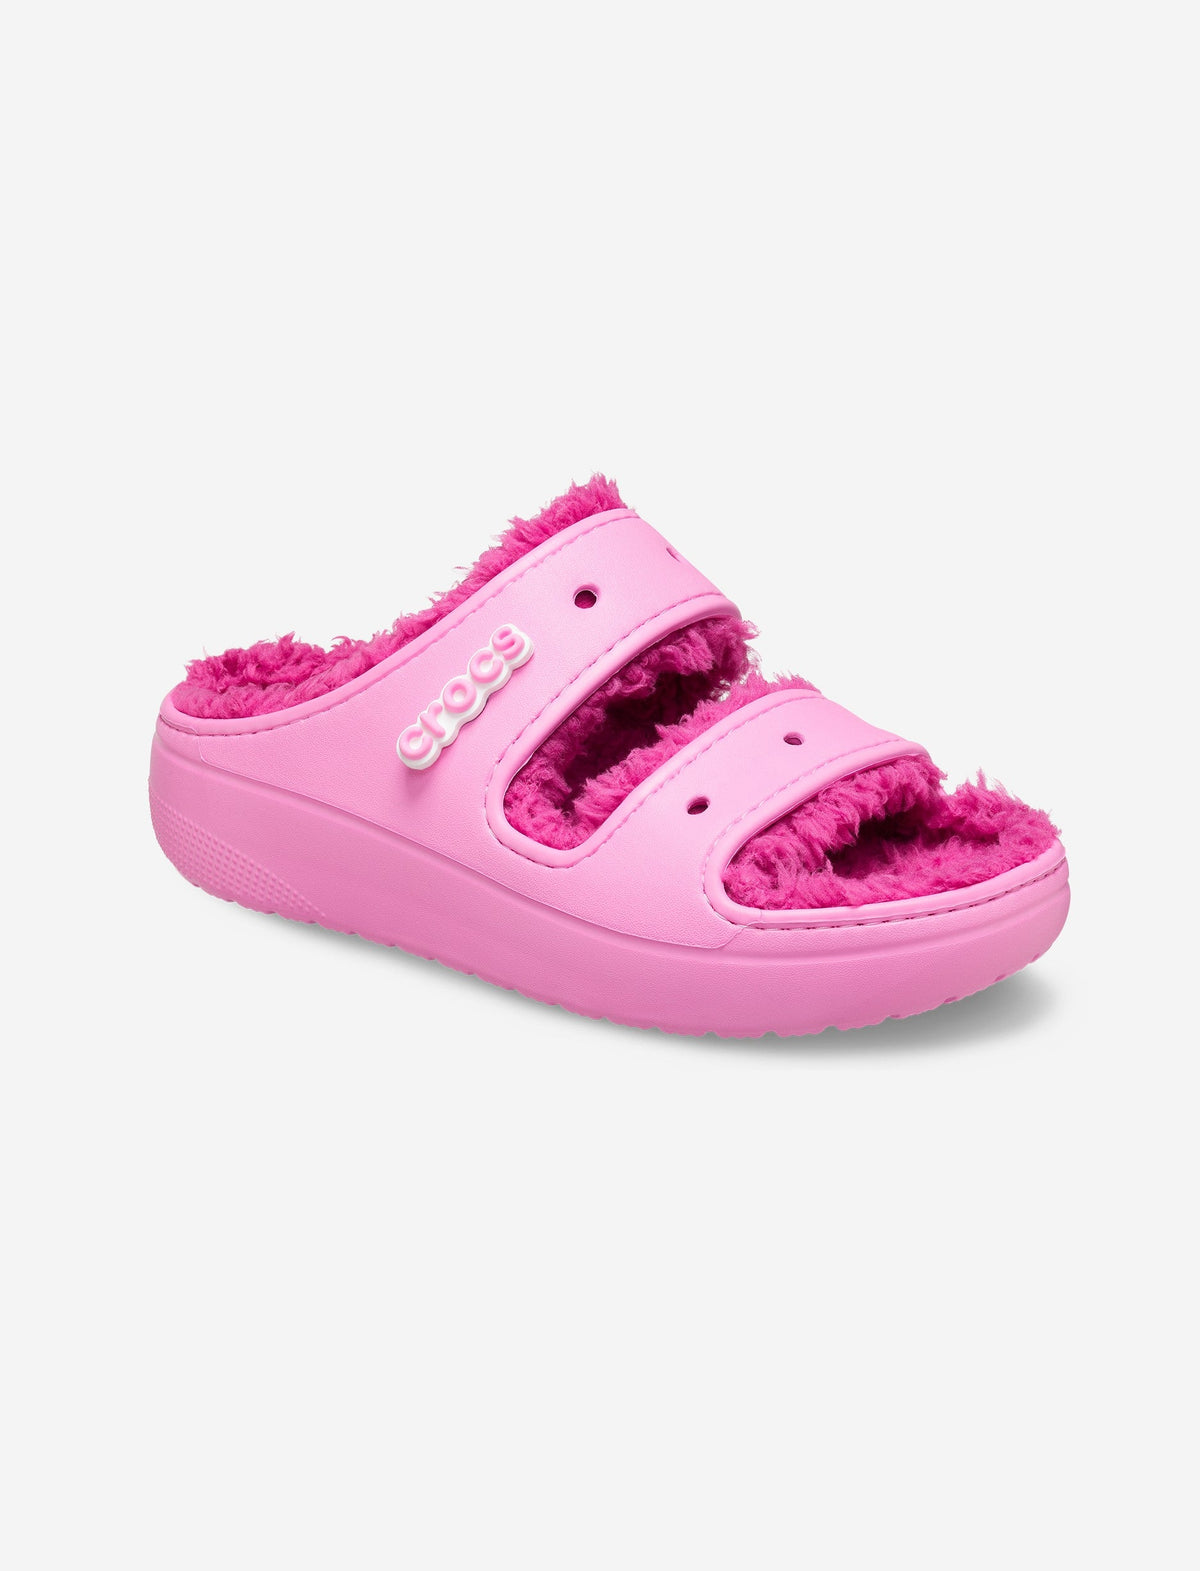 Crocs Classic Cozzzy Sandal -כפכפי קרוקס פרווה לנשים בצבע ורוד טאפי-Crocs-36-37-נאקו